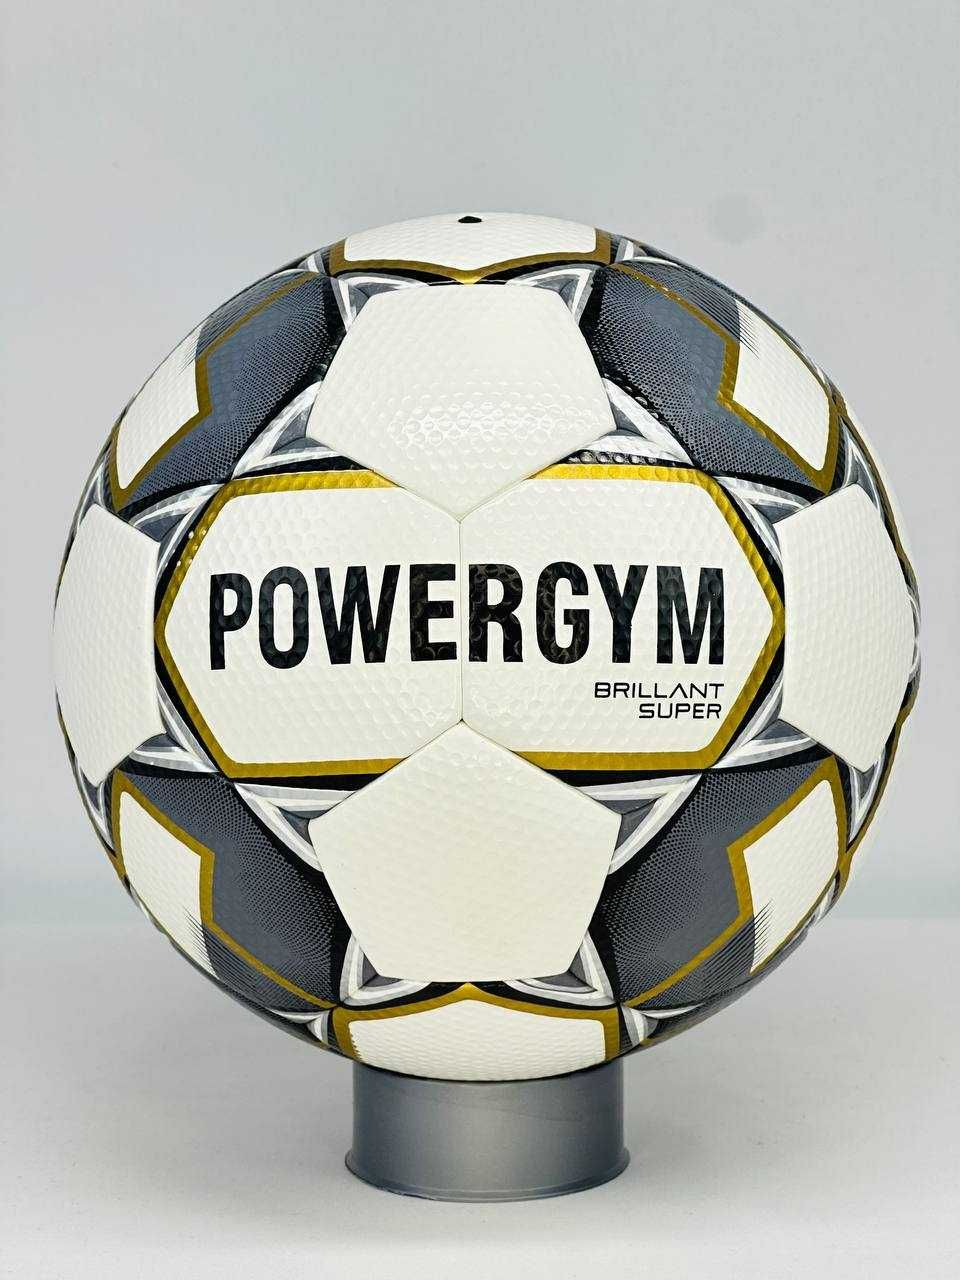 POWERGYM brendidan futbol to'plari | Футбольные мячи бренда POWERGYM